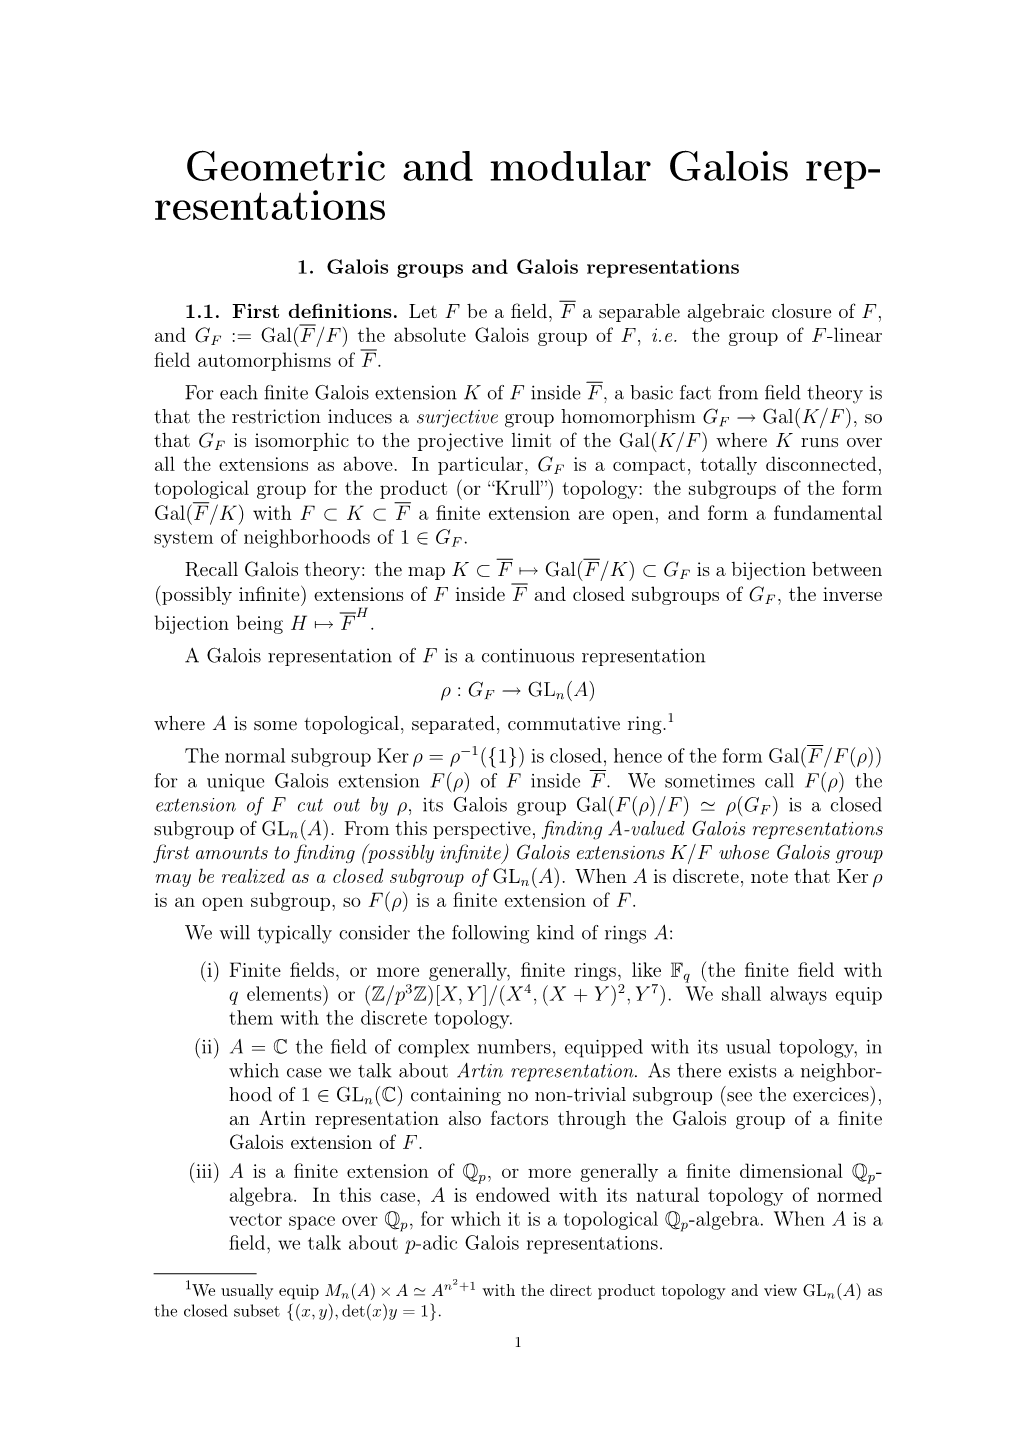 Geometric and Modular Galois Rep- Resentations